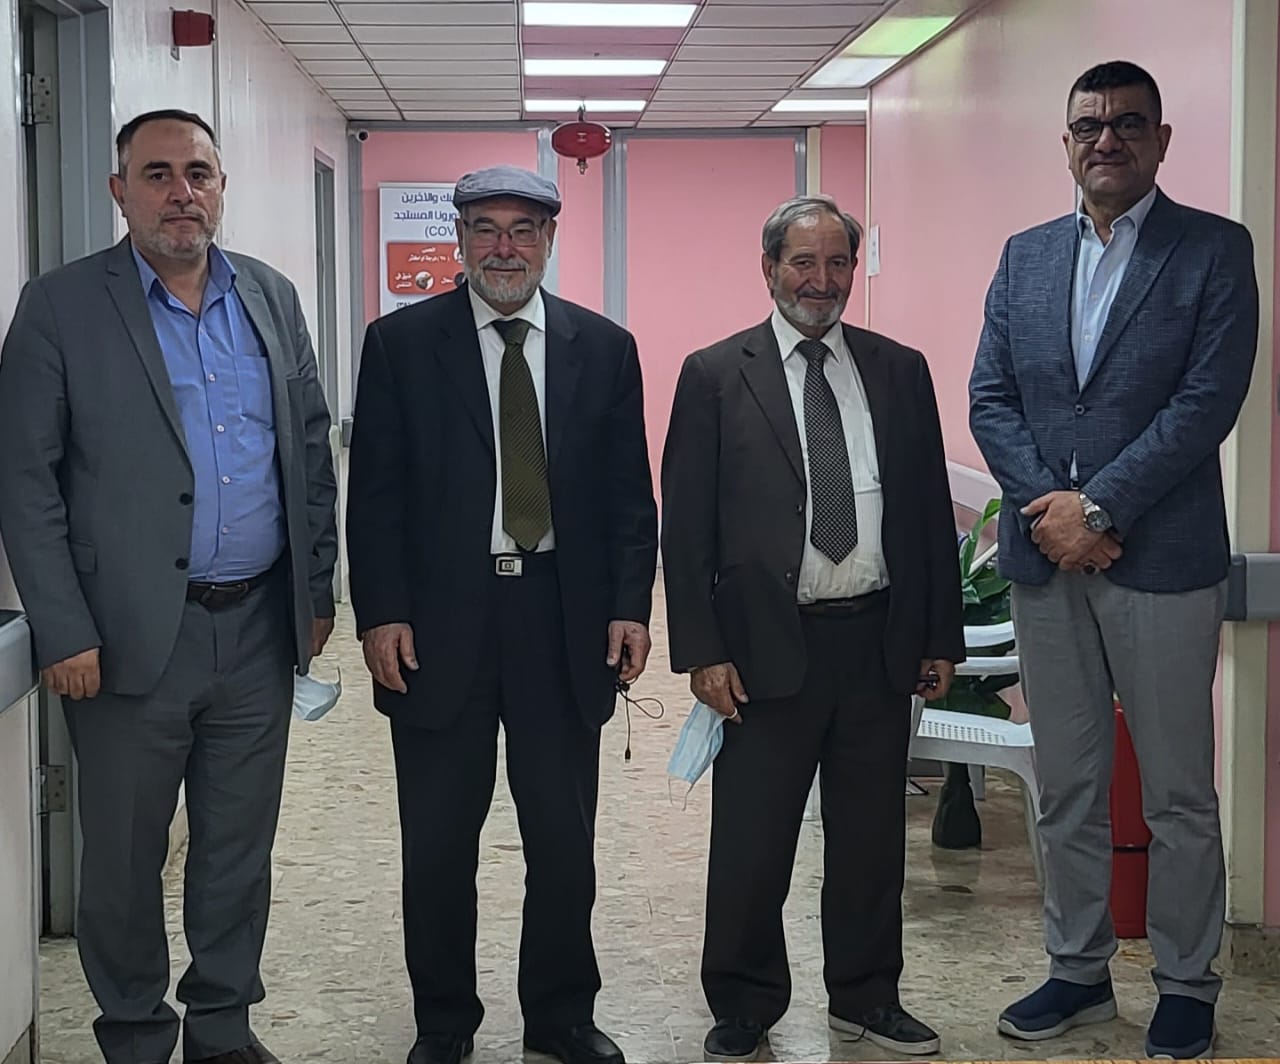 25 prof dr ehtuish trip Karbala iraq hospital centers evaluation